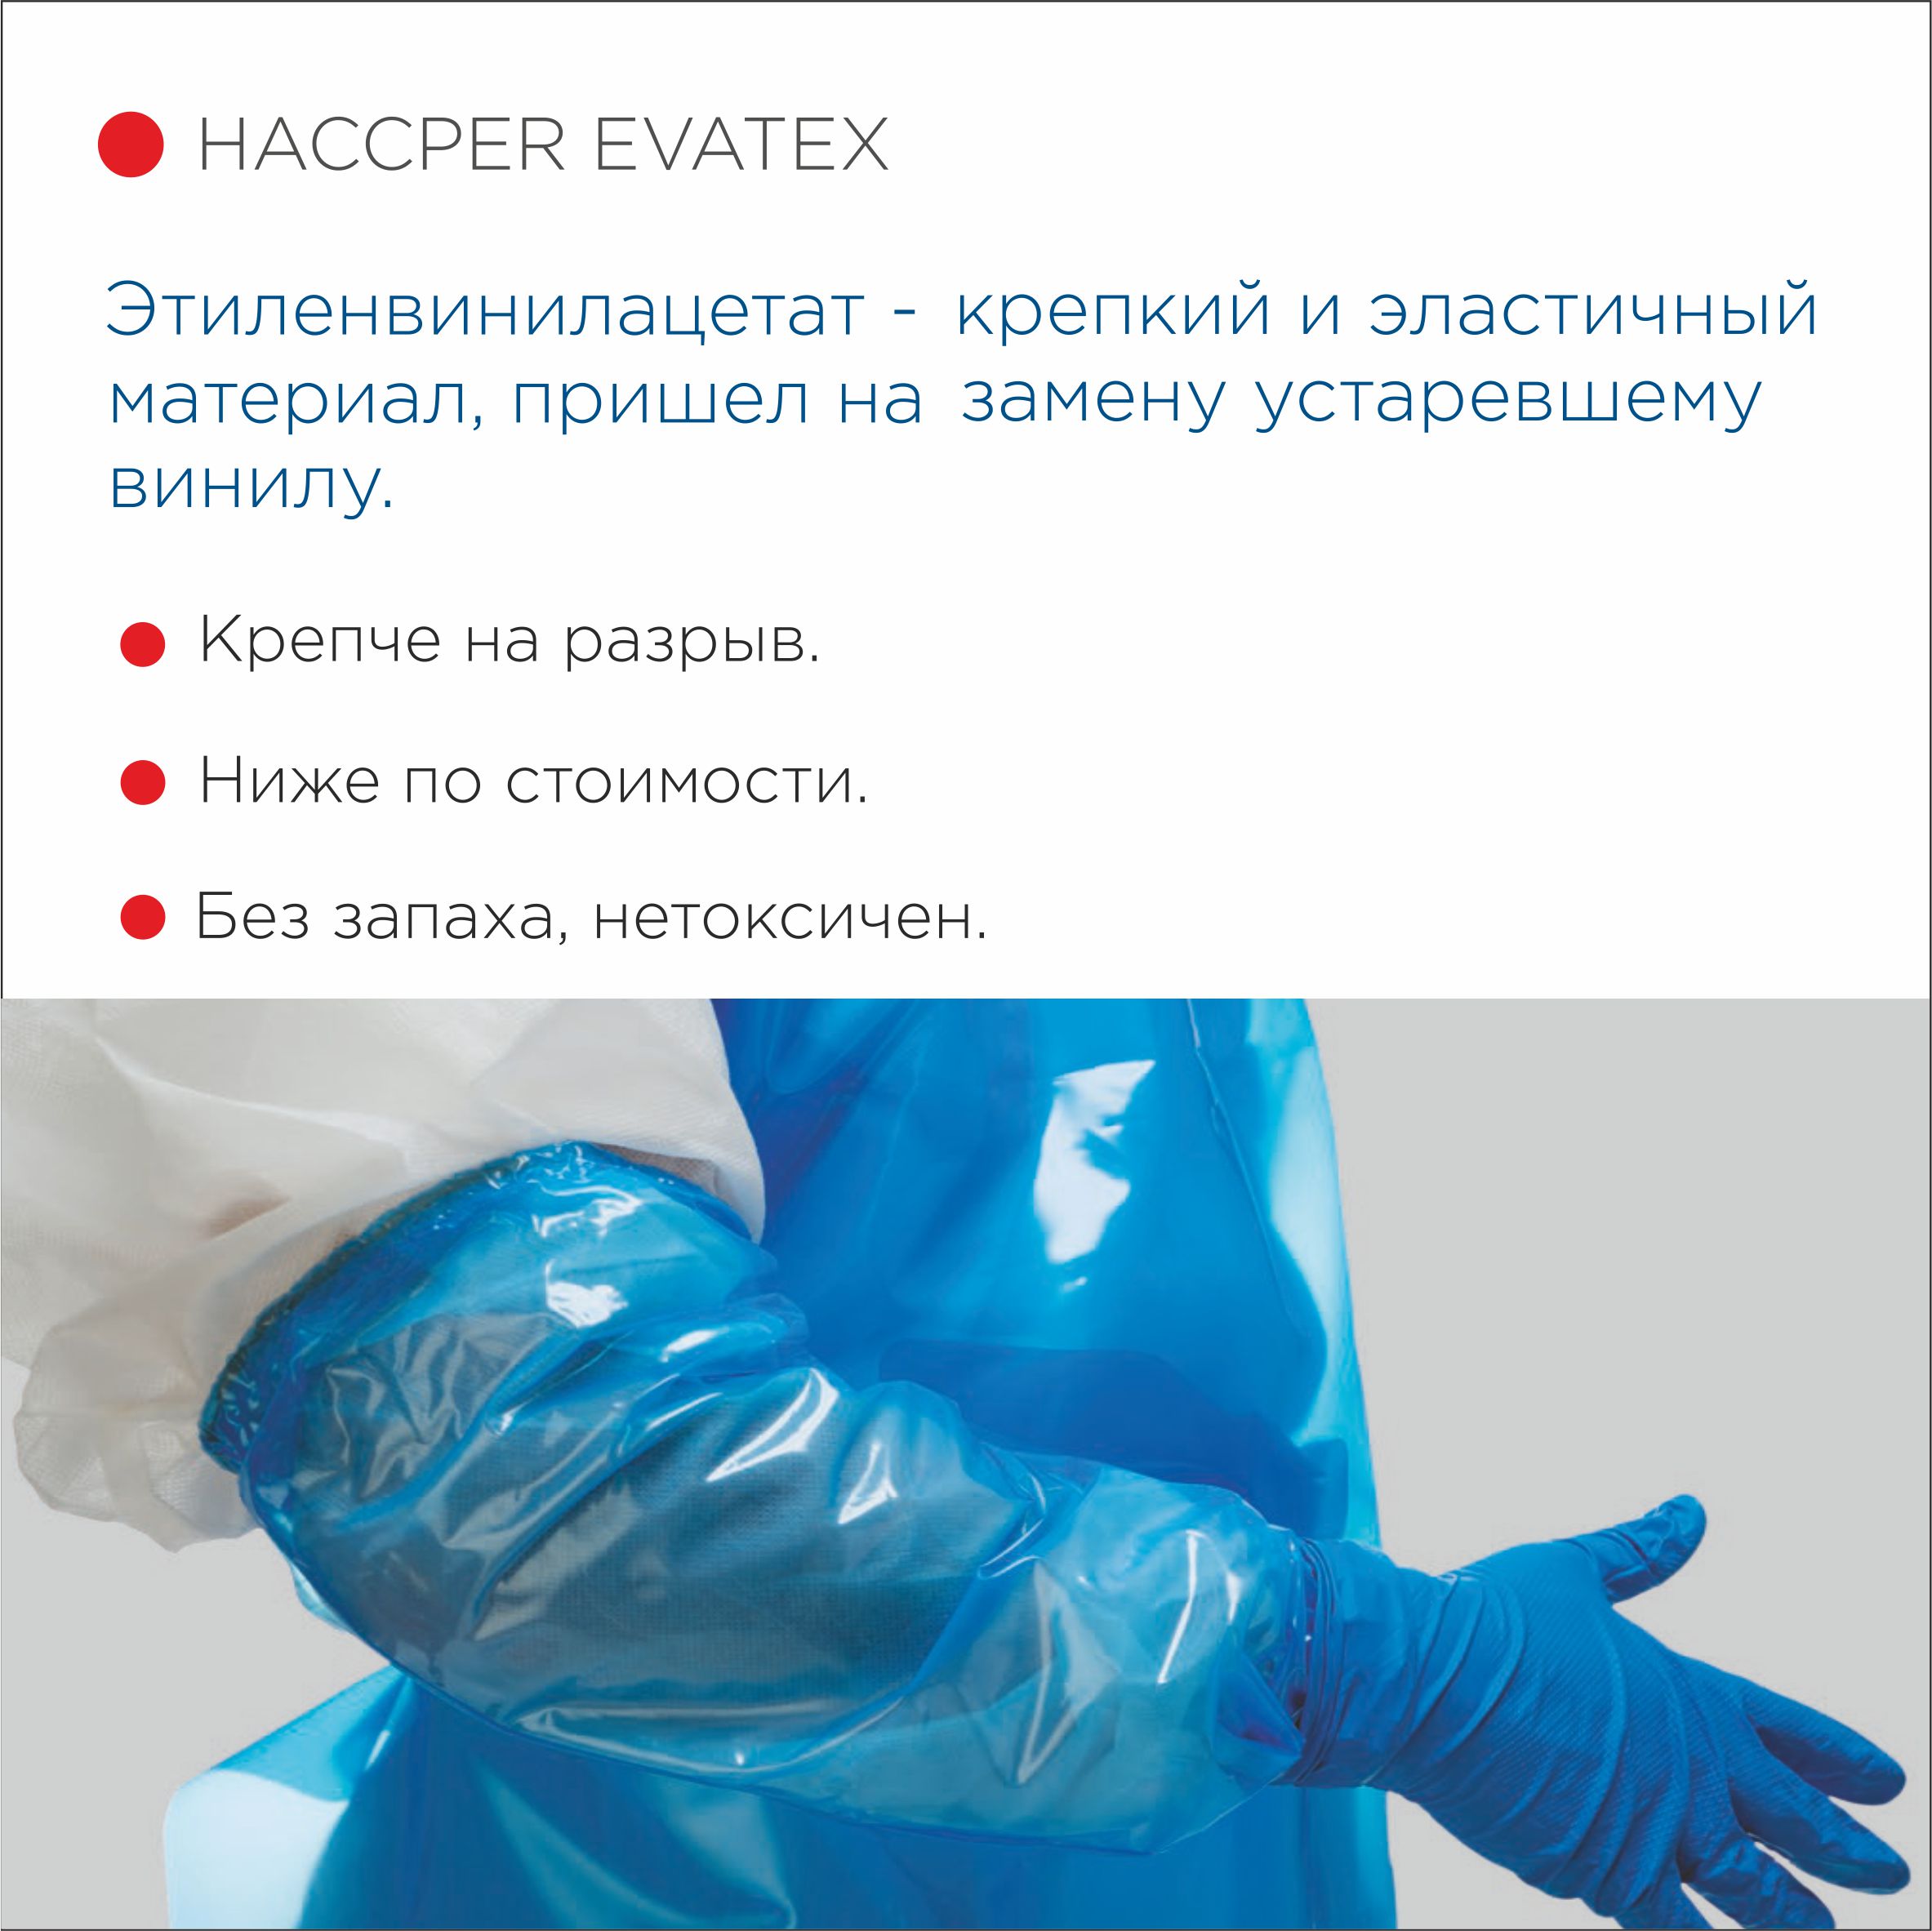 Фартук HACCPER Evatex с рукавами, размер L, 1300х950 мм